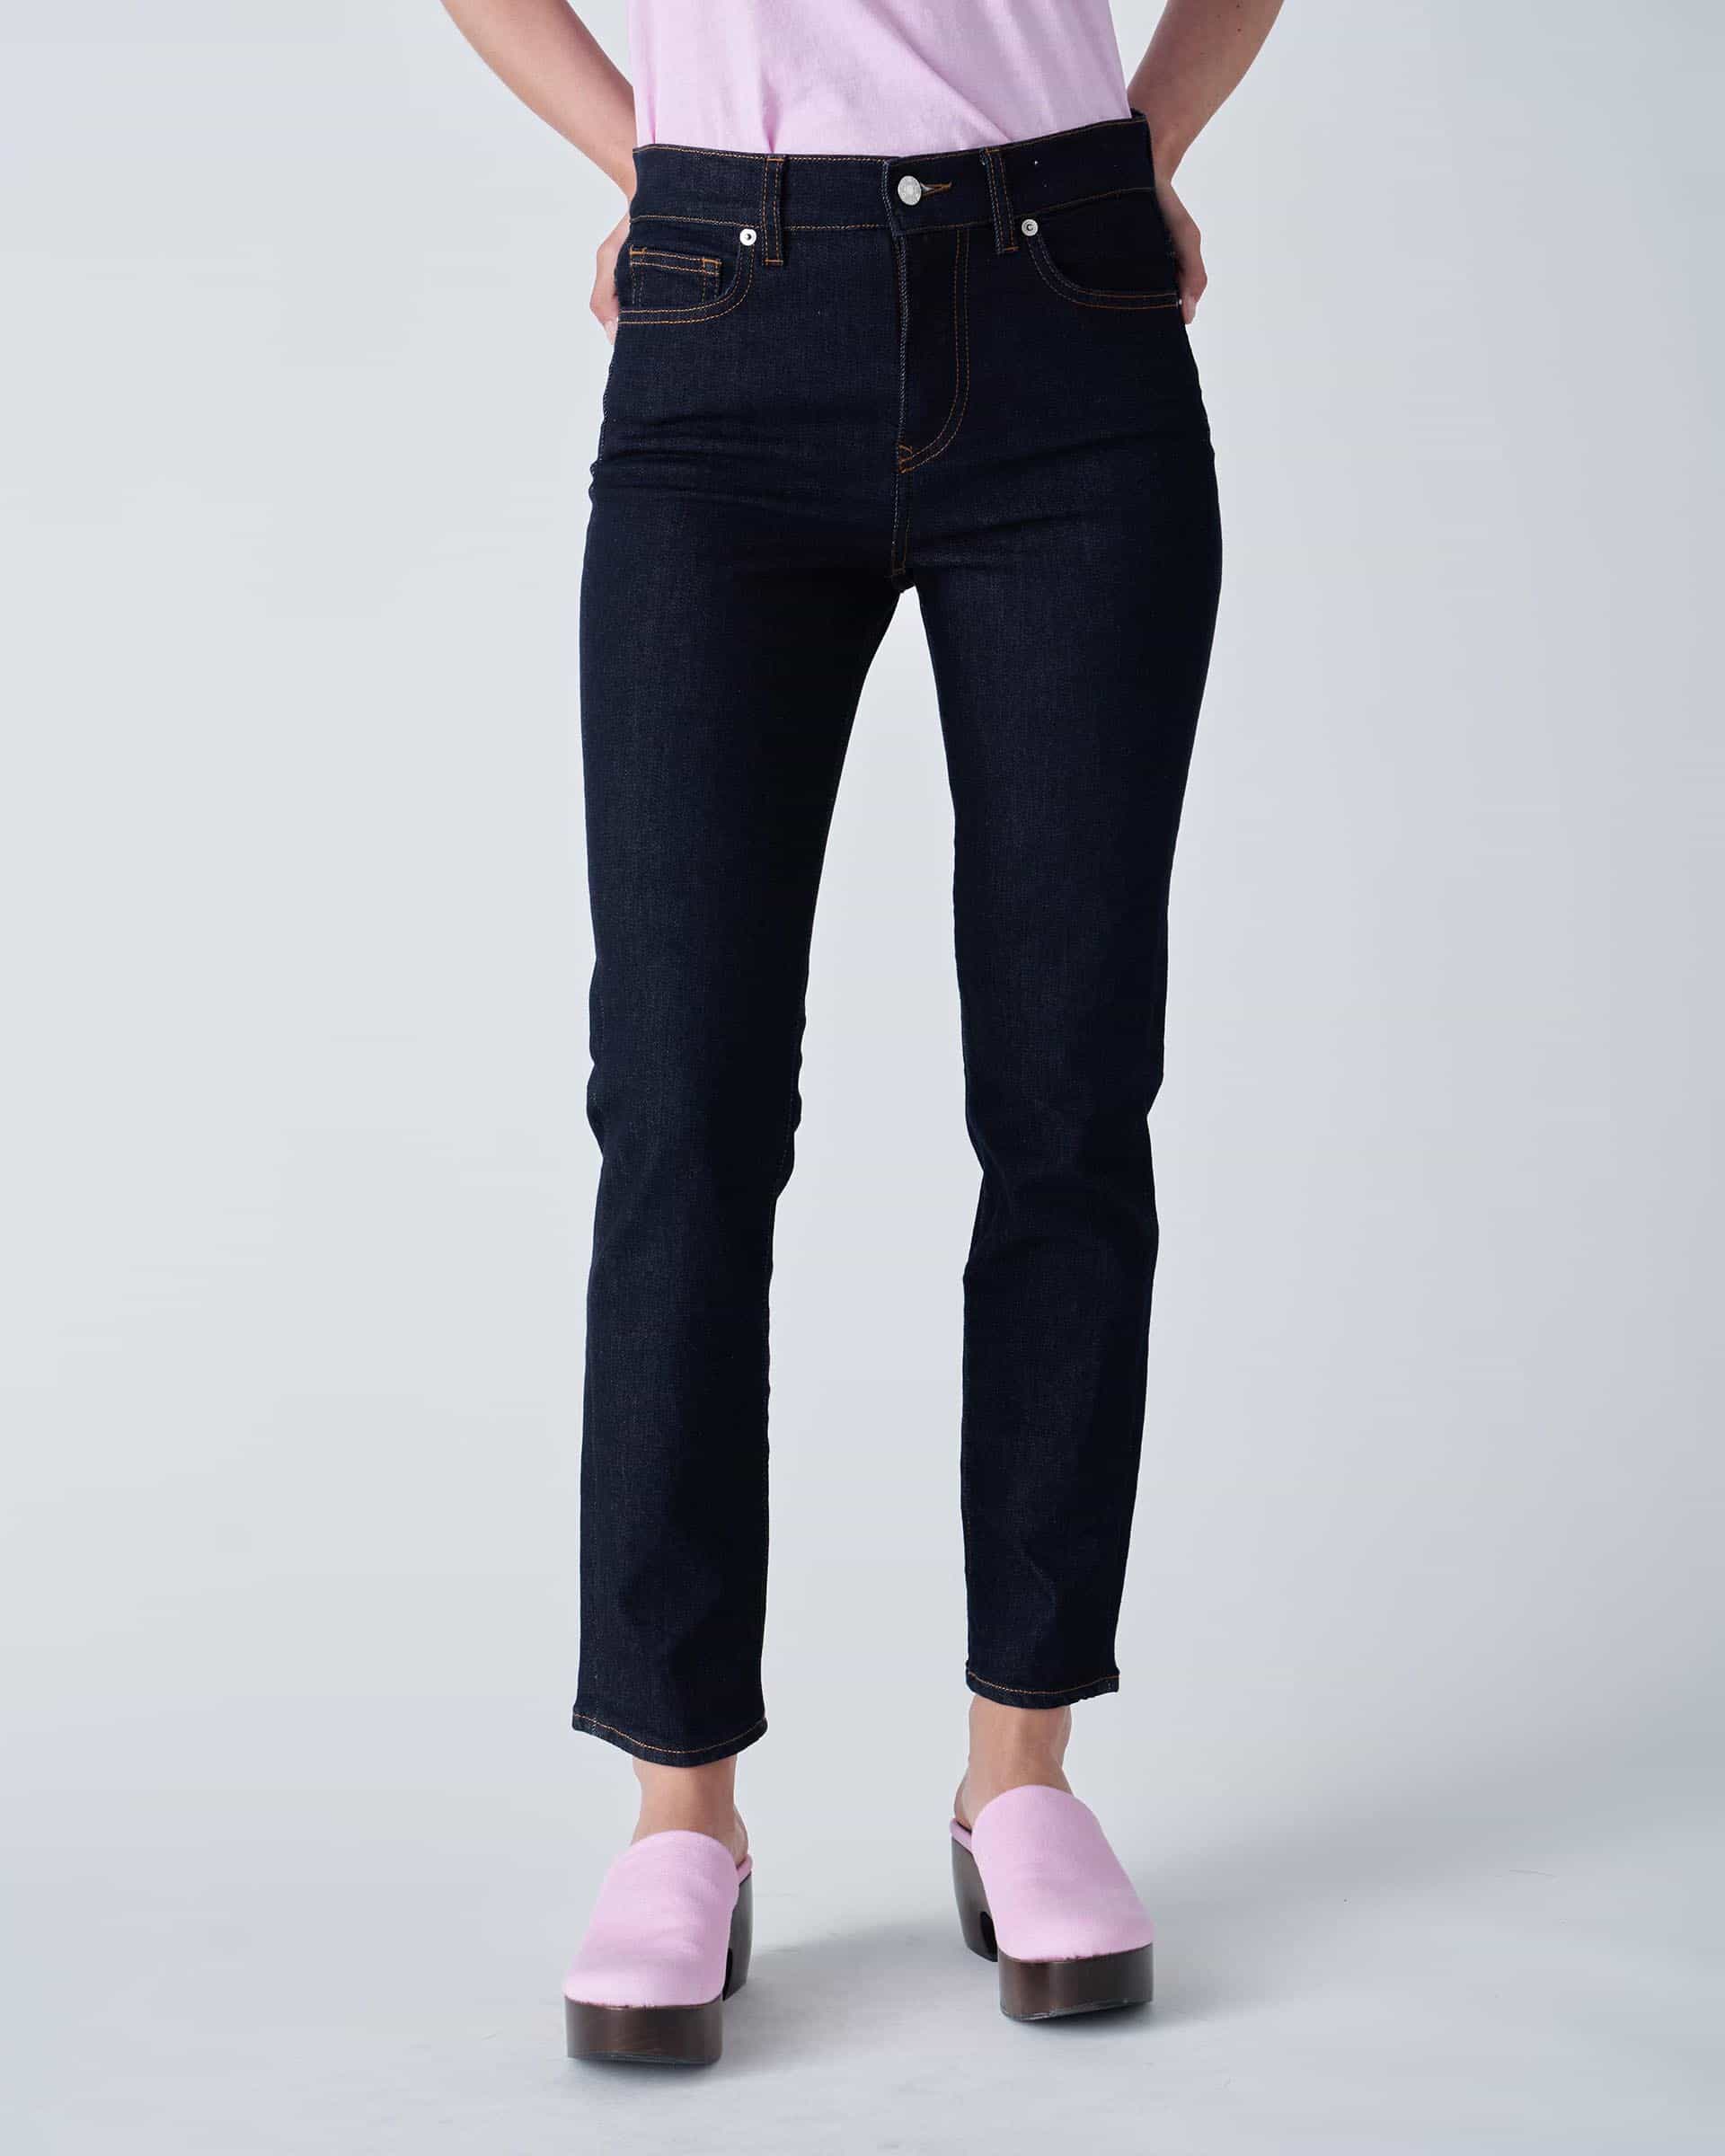 The Market Store | Jiji Regular Slim Denim Trousers